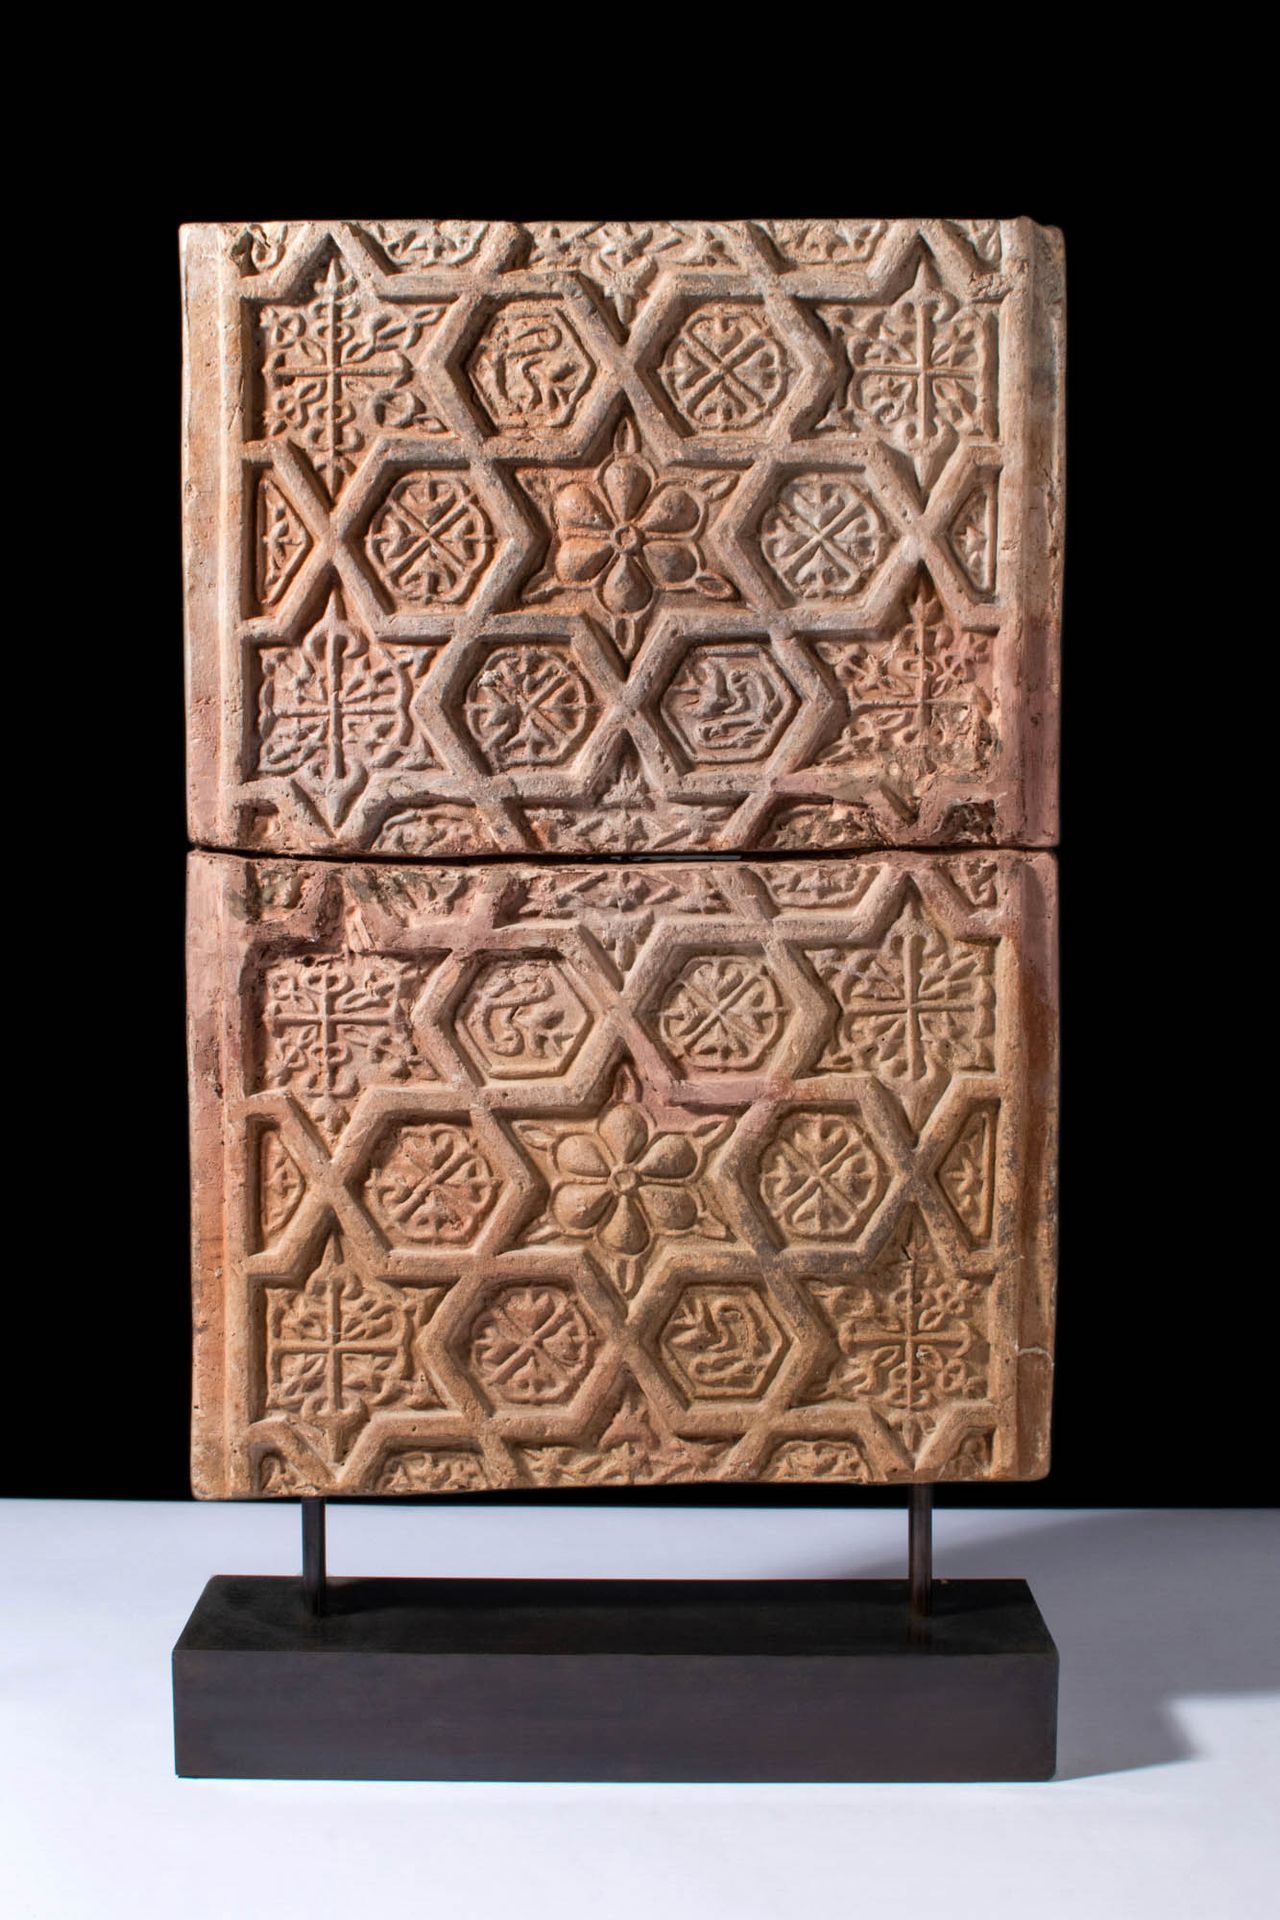 SELJUK TERRACOTTA PAIR OF DECORATIVE TILES Ca. AD 1100 - 1200.
Ein Paar rechteck&hellip;